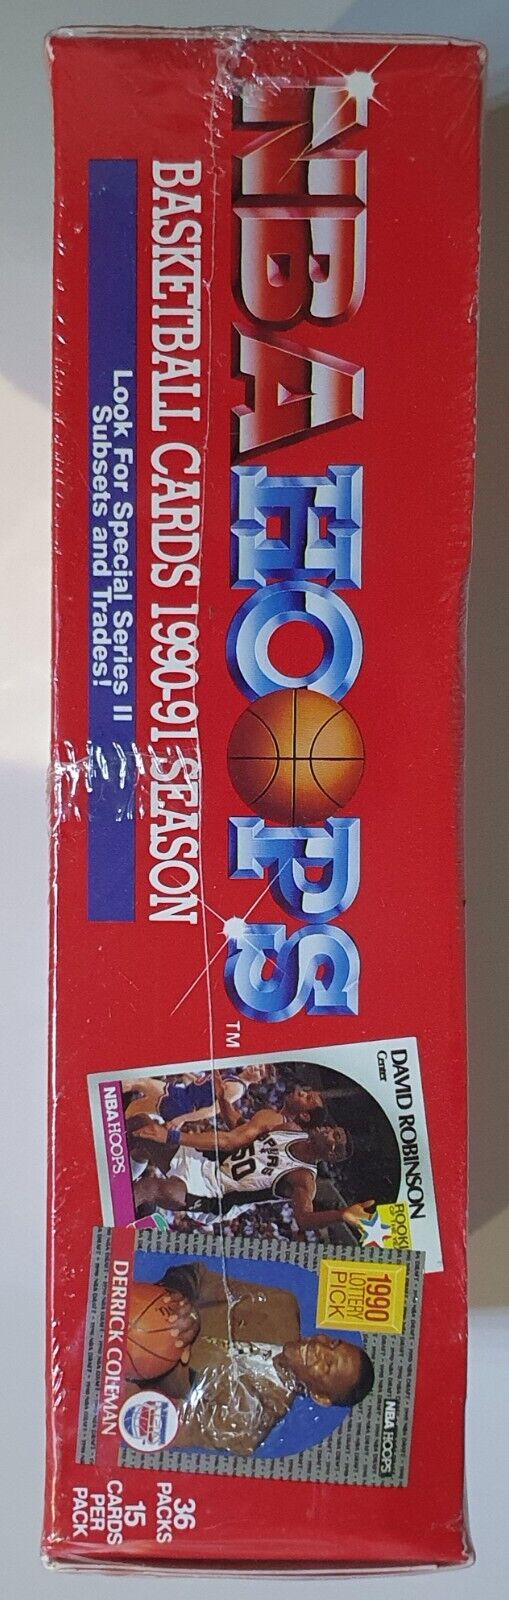 1990-91 NBA Hoops Basketball Series 2 Sealed Box - Factory Sealed